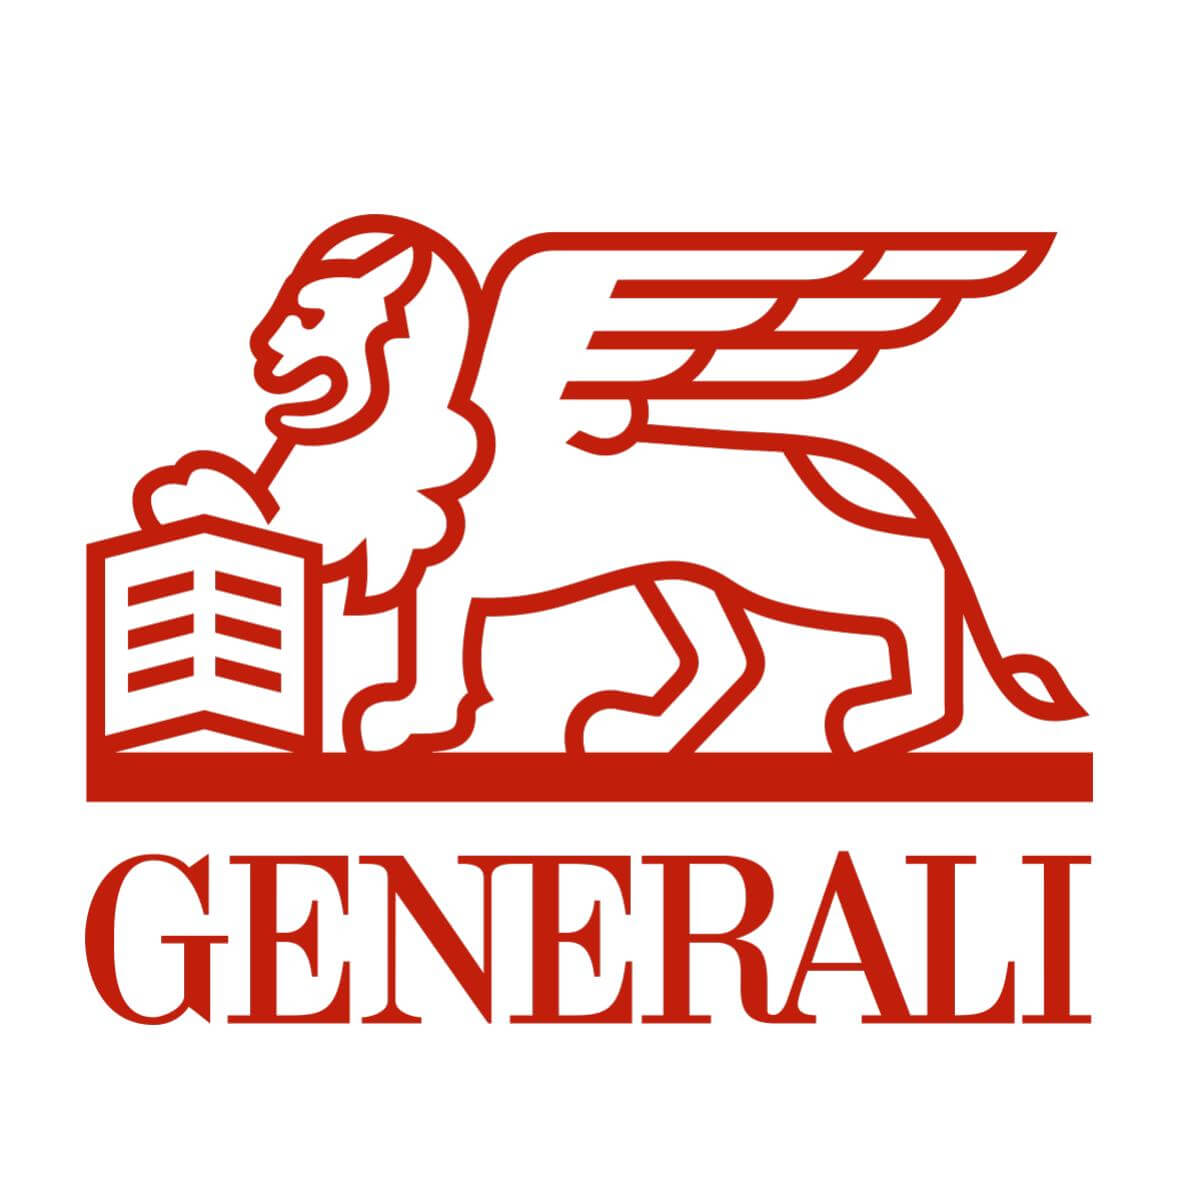 Copy of red Generali B 300 resolution